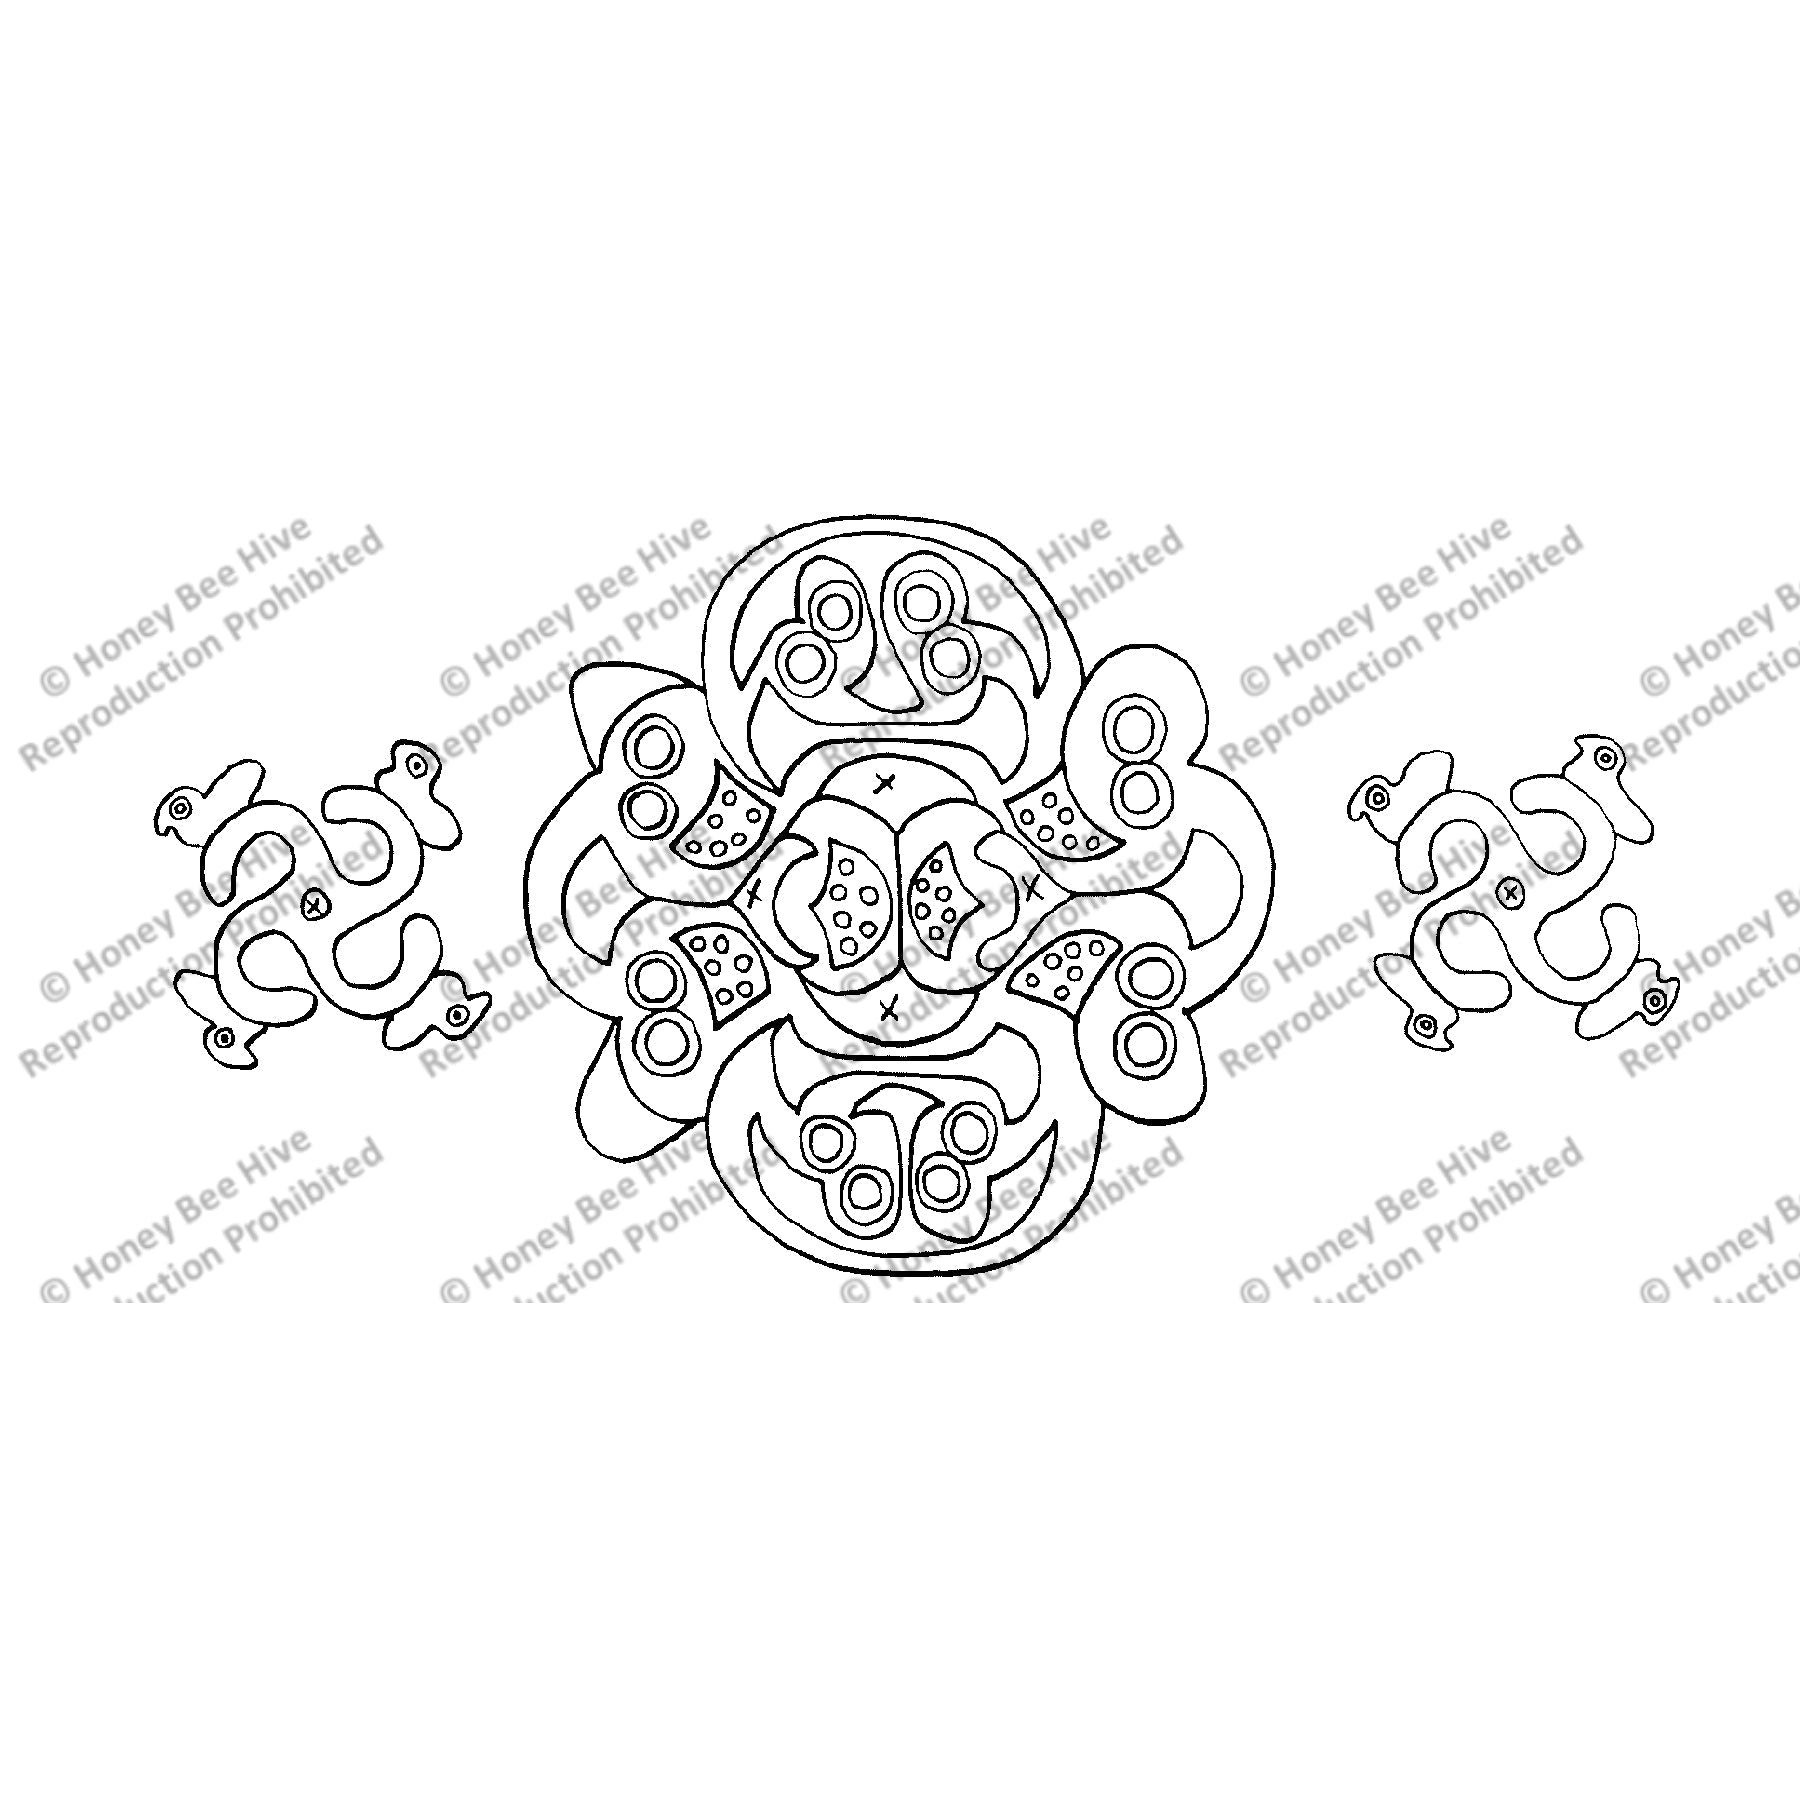 Celtic Horse Ornaments - Ornament #6, rug hooking pattern